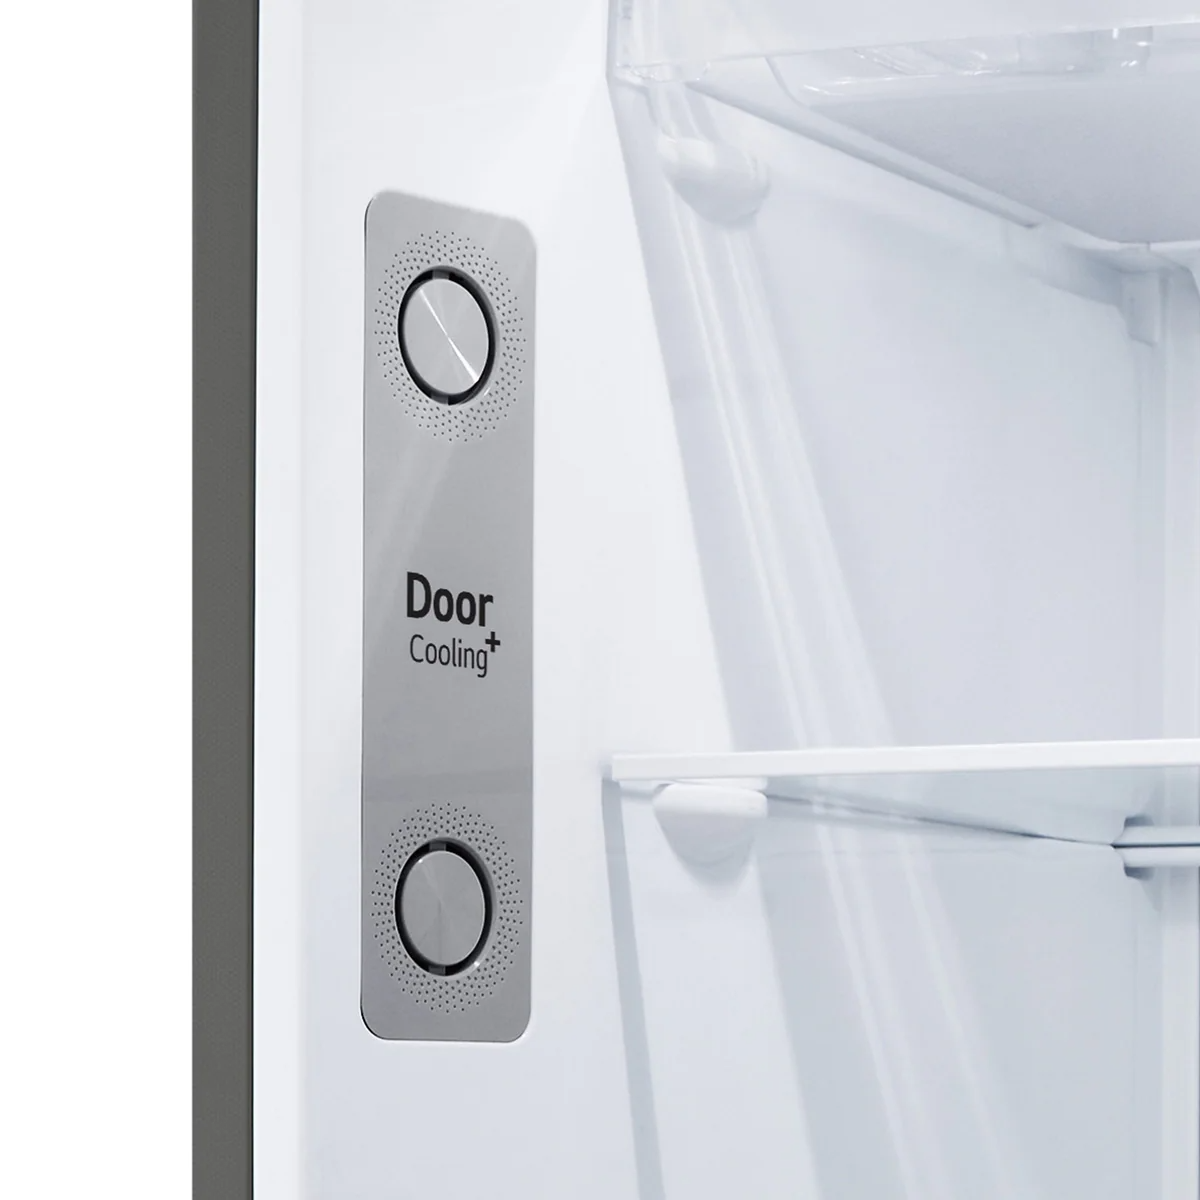 LG B332S13 335L Top Freezer Refrigerator 智能變頻式上置式冷凍型雪櫃